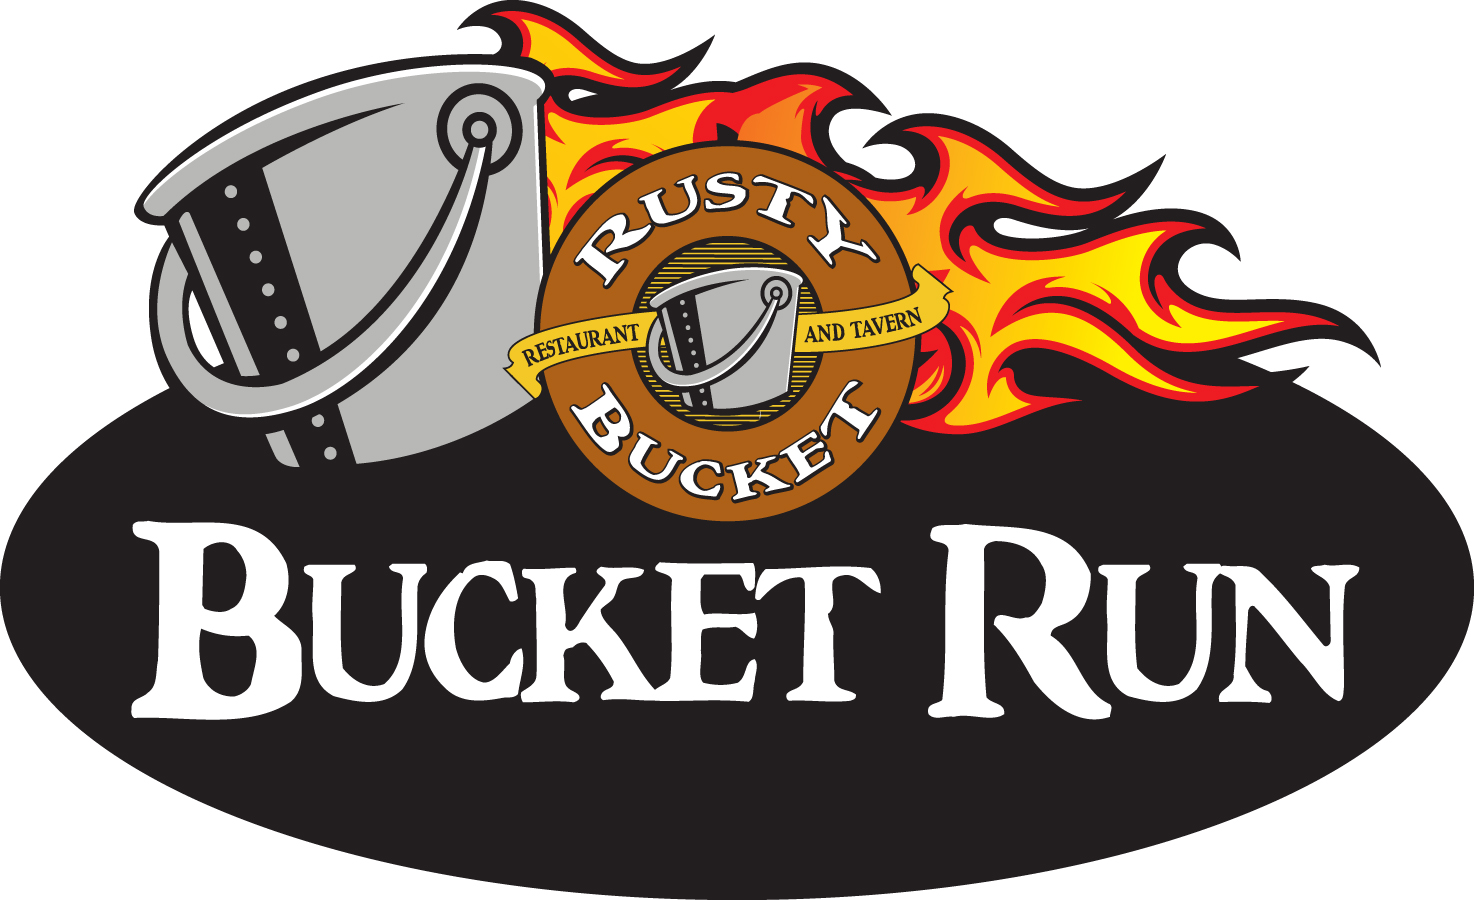 The Rusty Bucket Restaurant & Tavern annual "Bucket Run" .